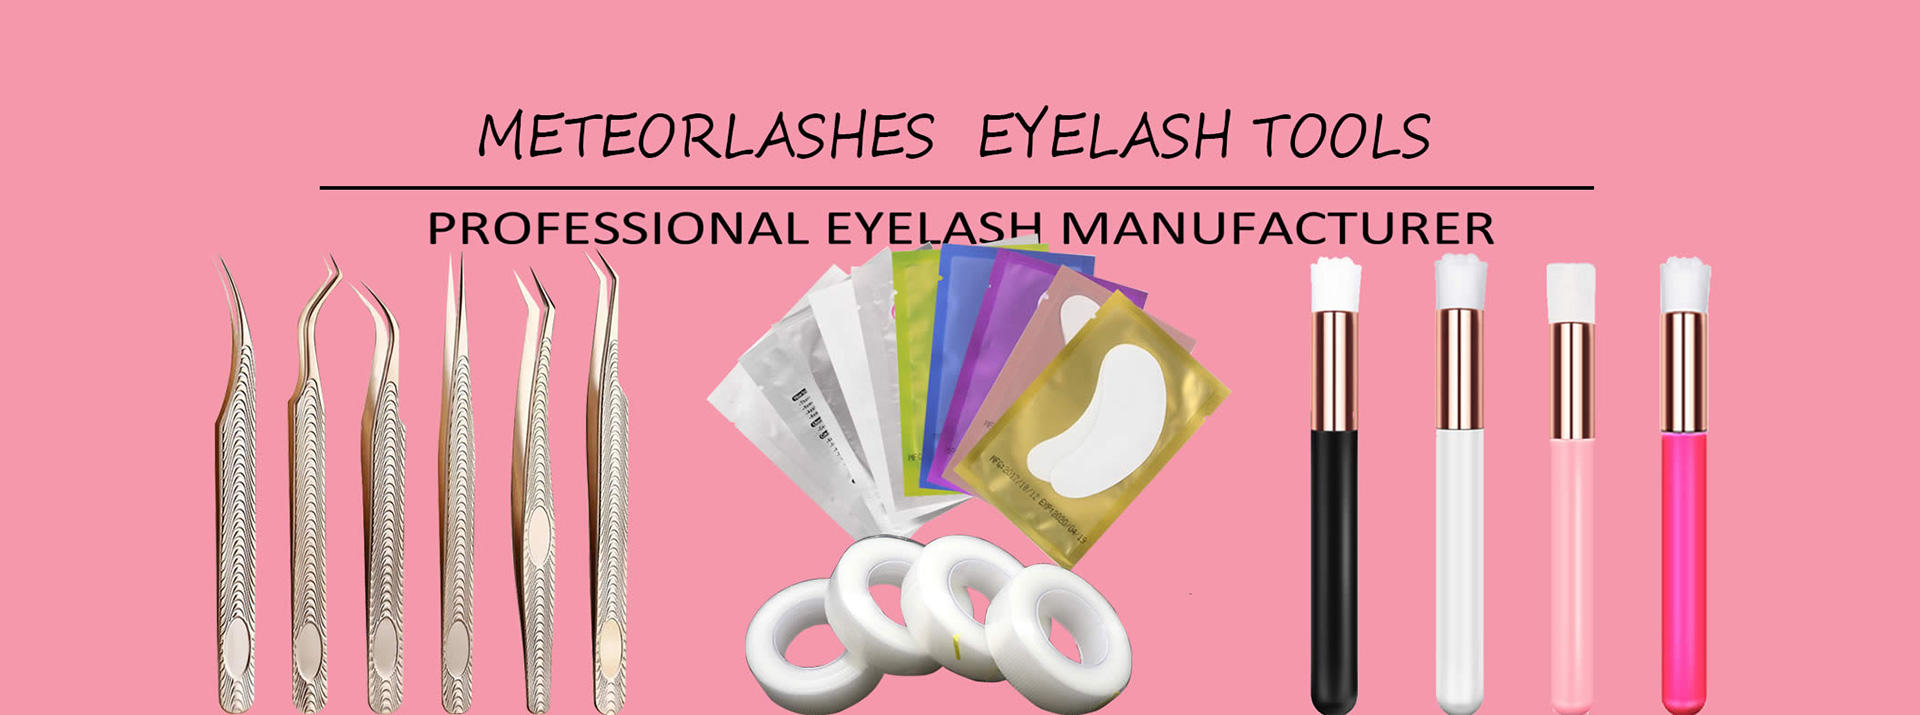 Eyelash Tractus Tools